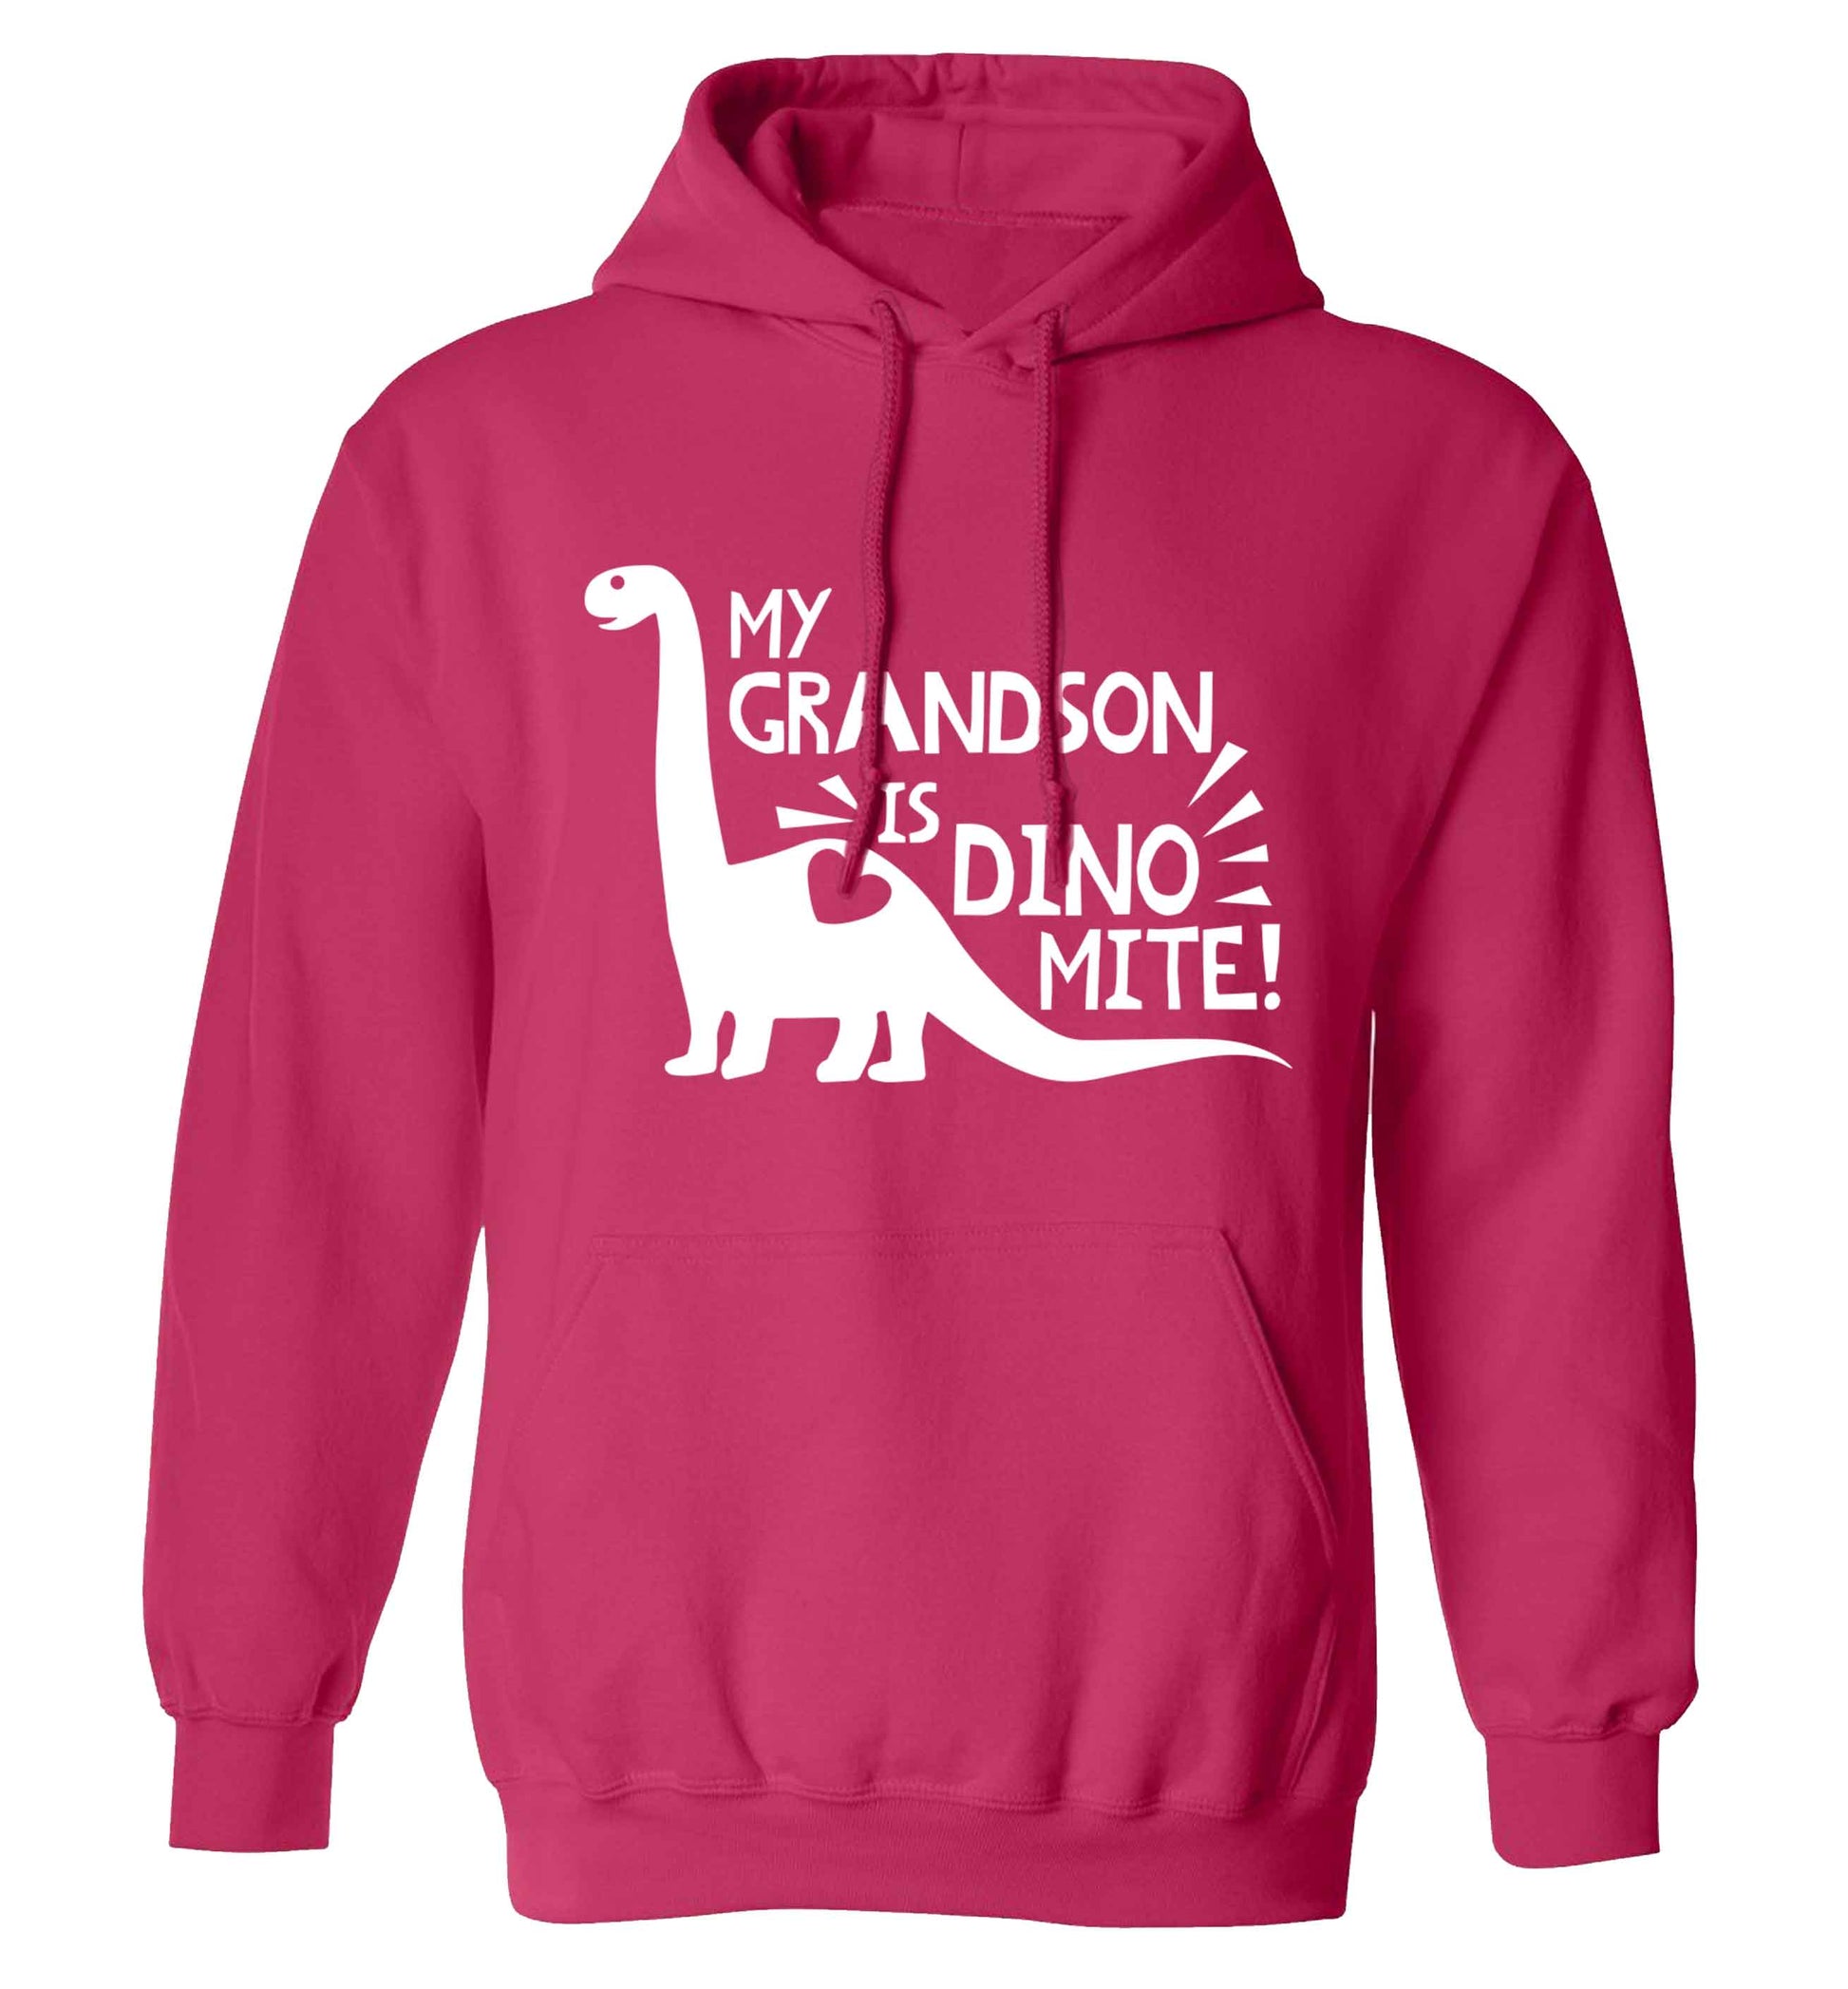 My grandson is dinomite! adults unisex pink hoodie 2XL